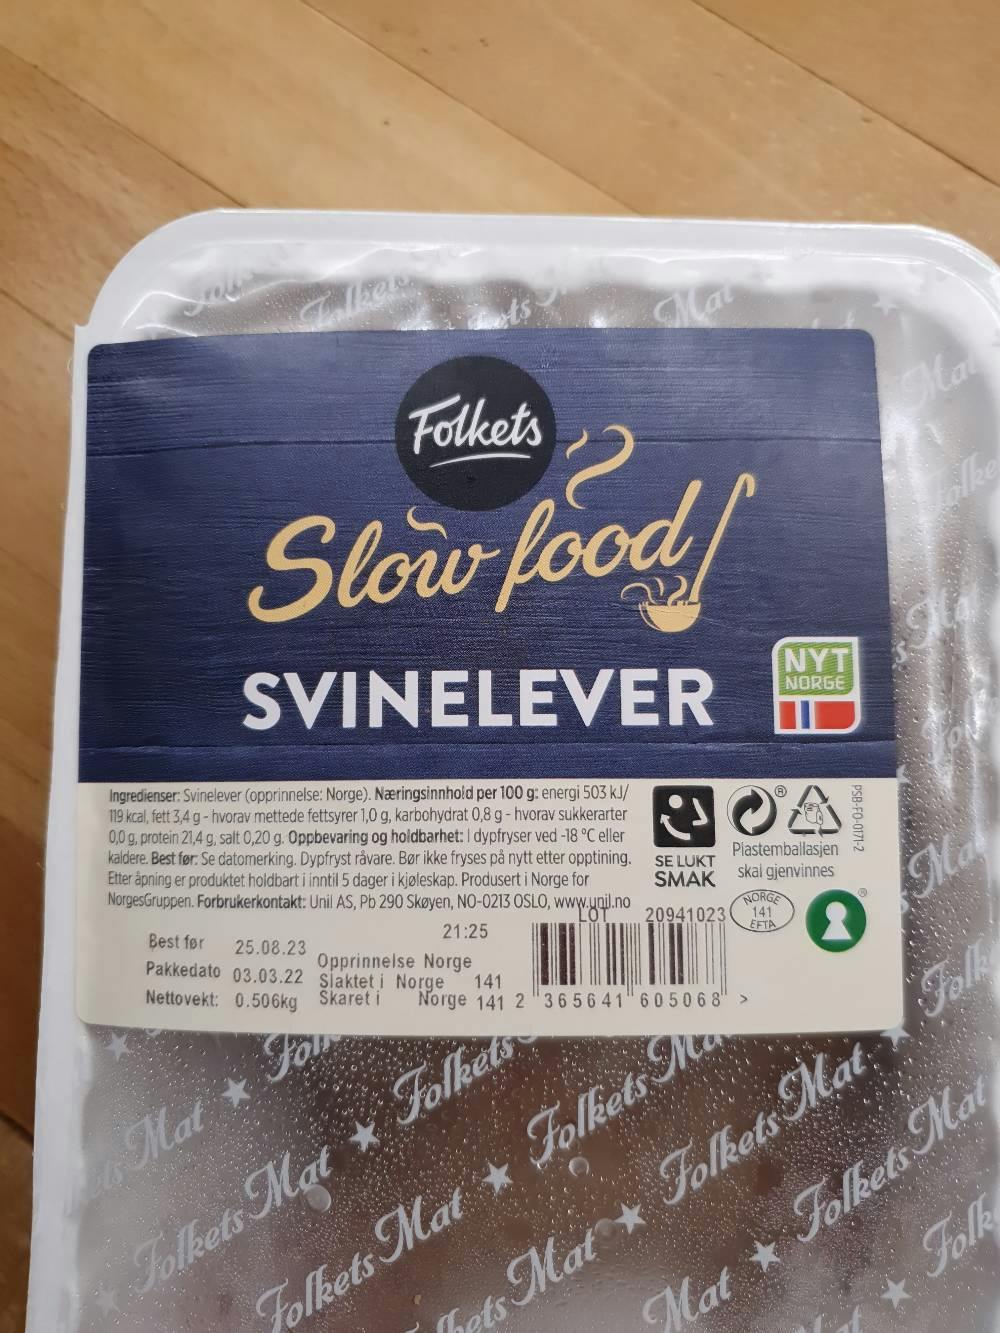 Slow food Svinelever, Folkets